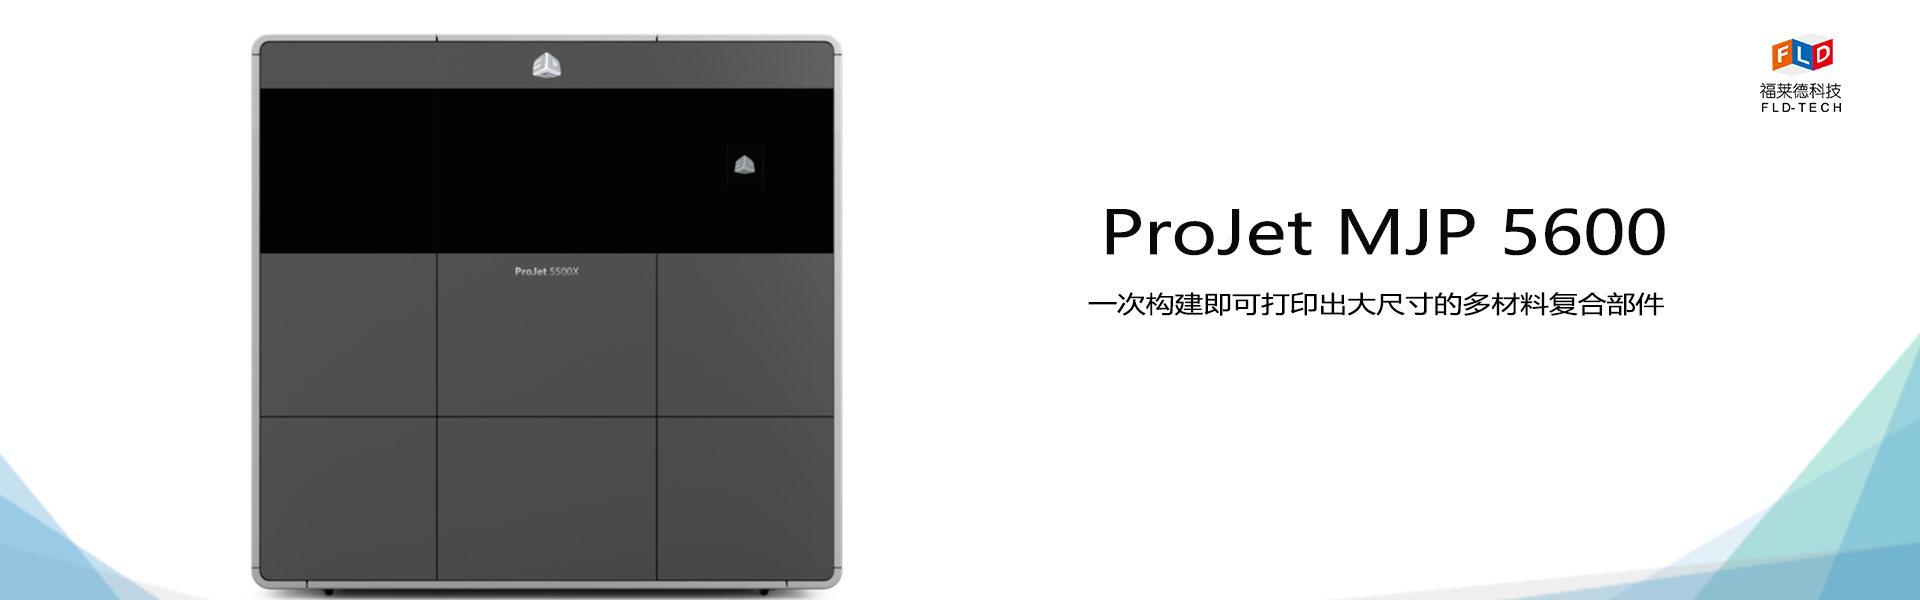 ProJet MJP 5600 3D打印機